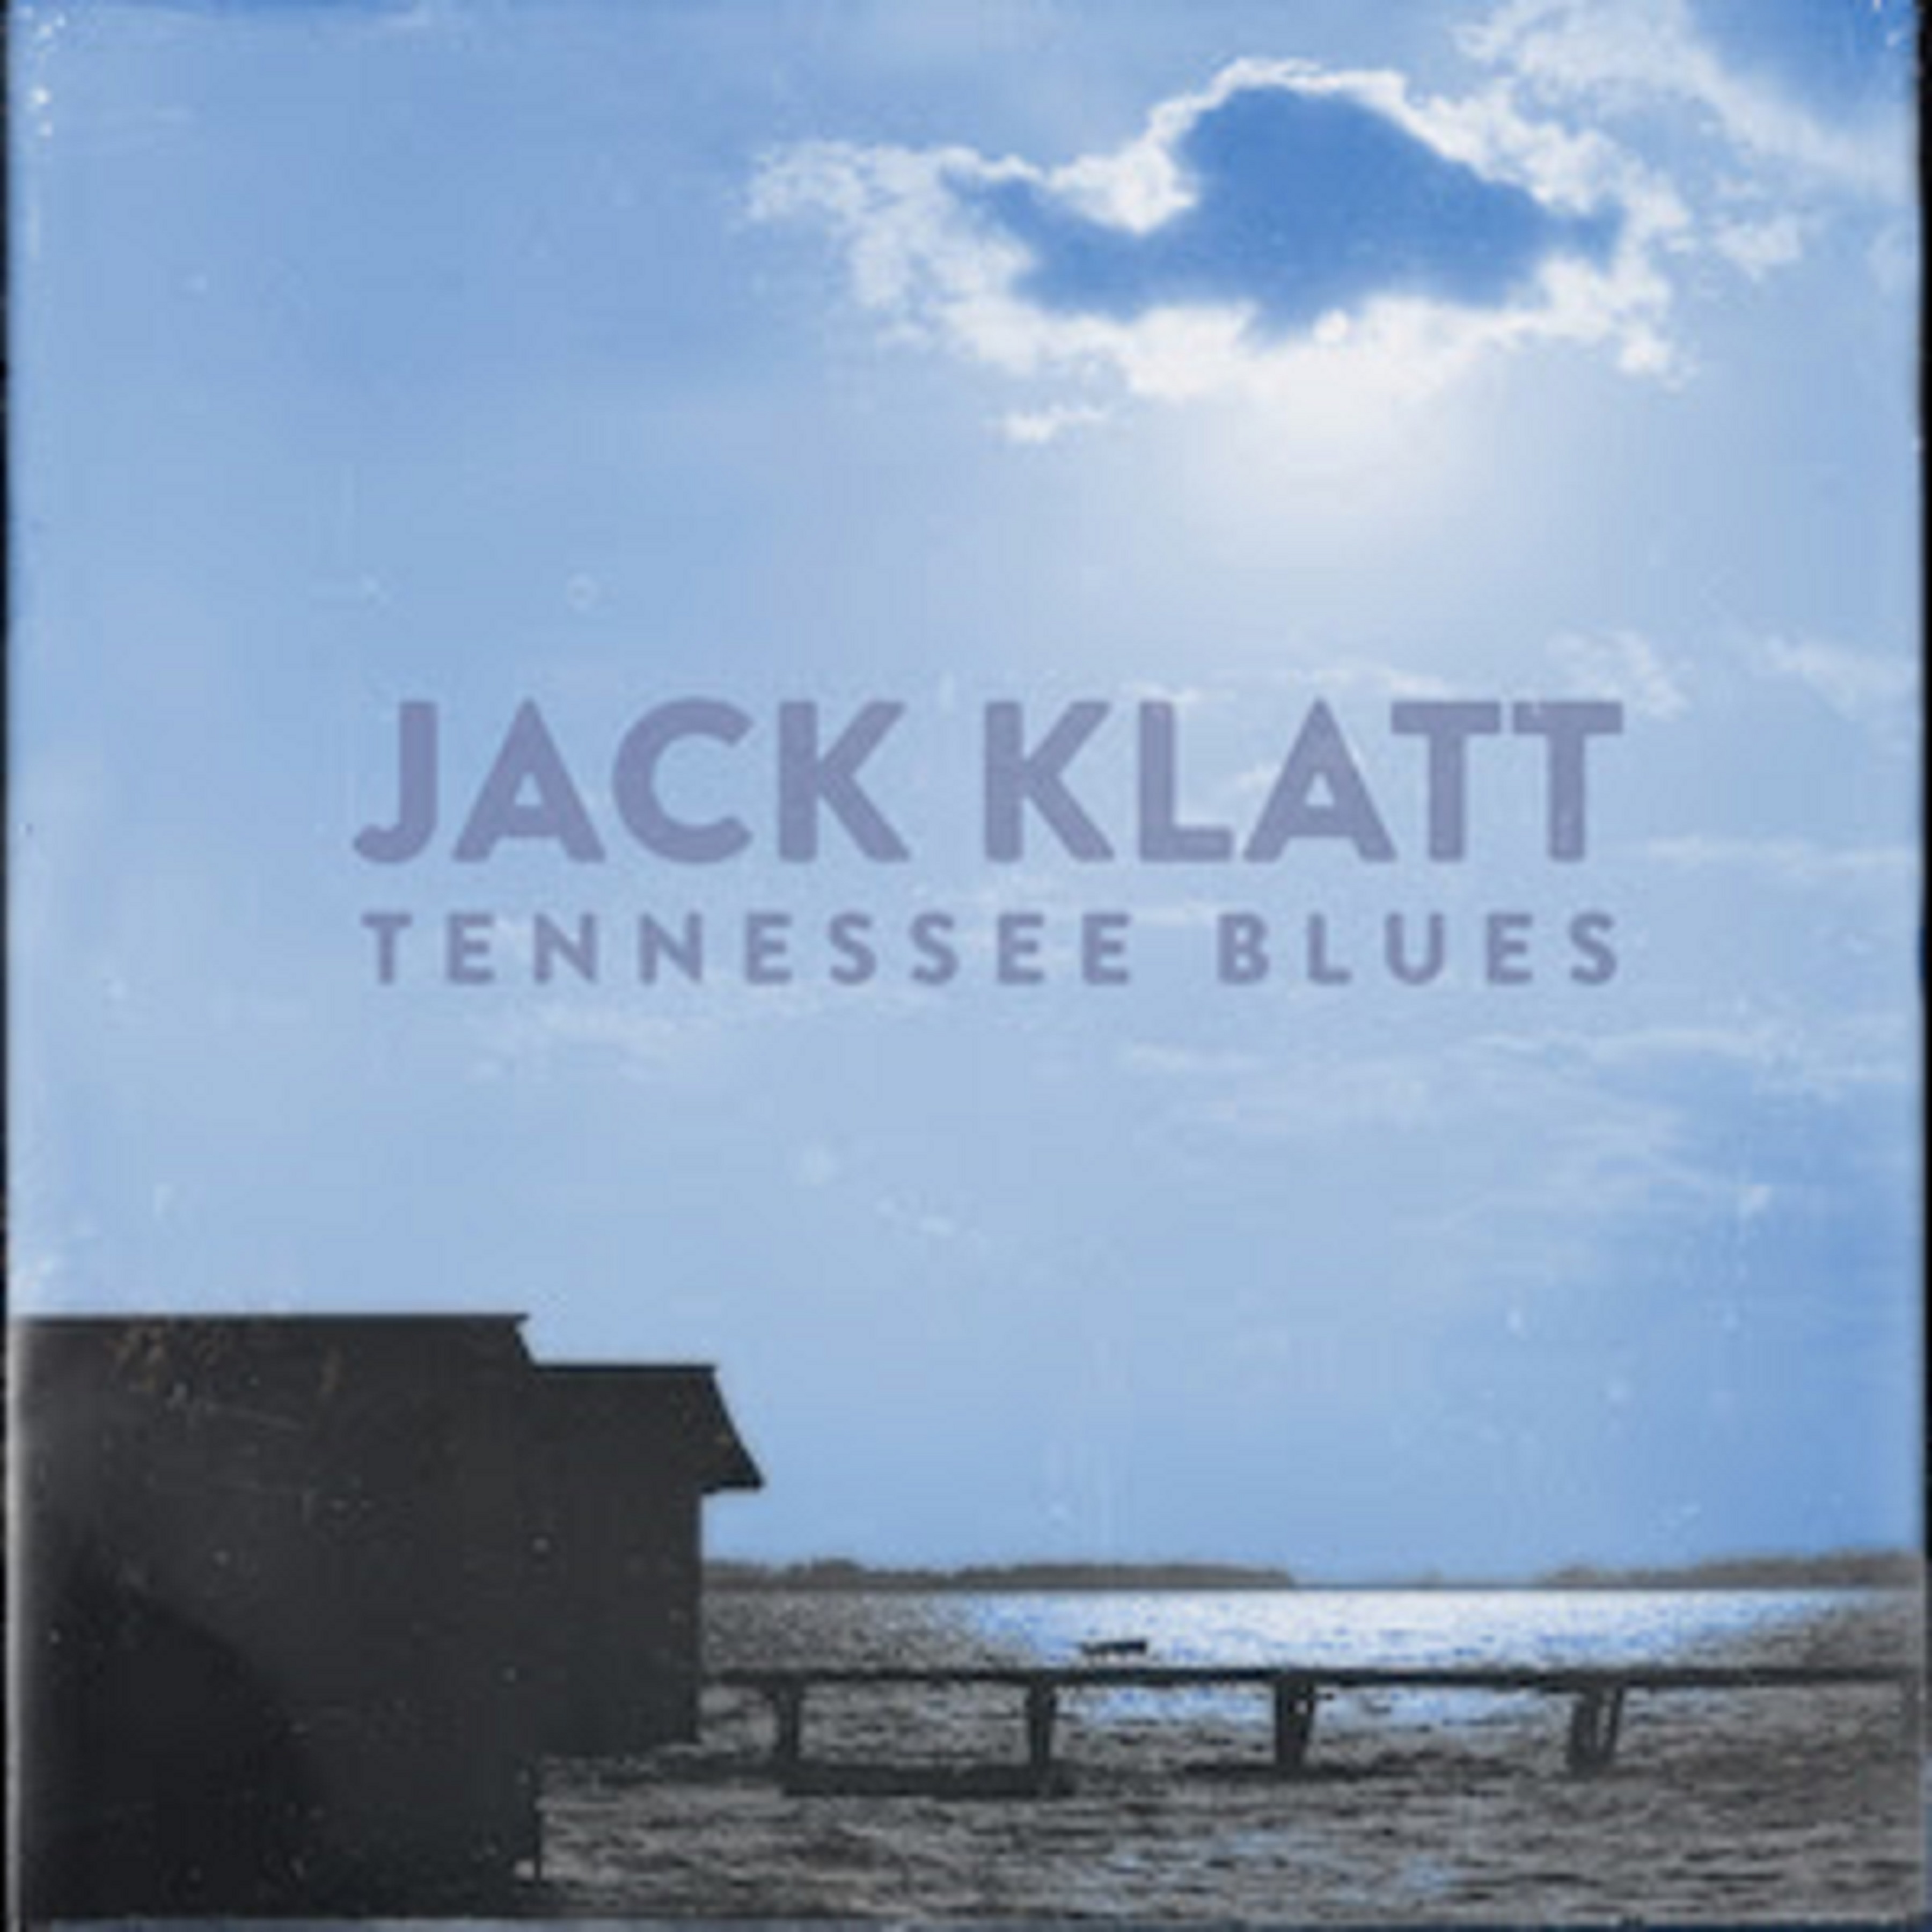 Jack Klatt’s New Single “Tennessee Blues” Out Now